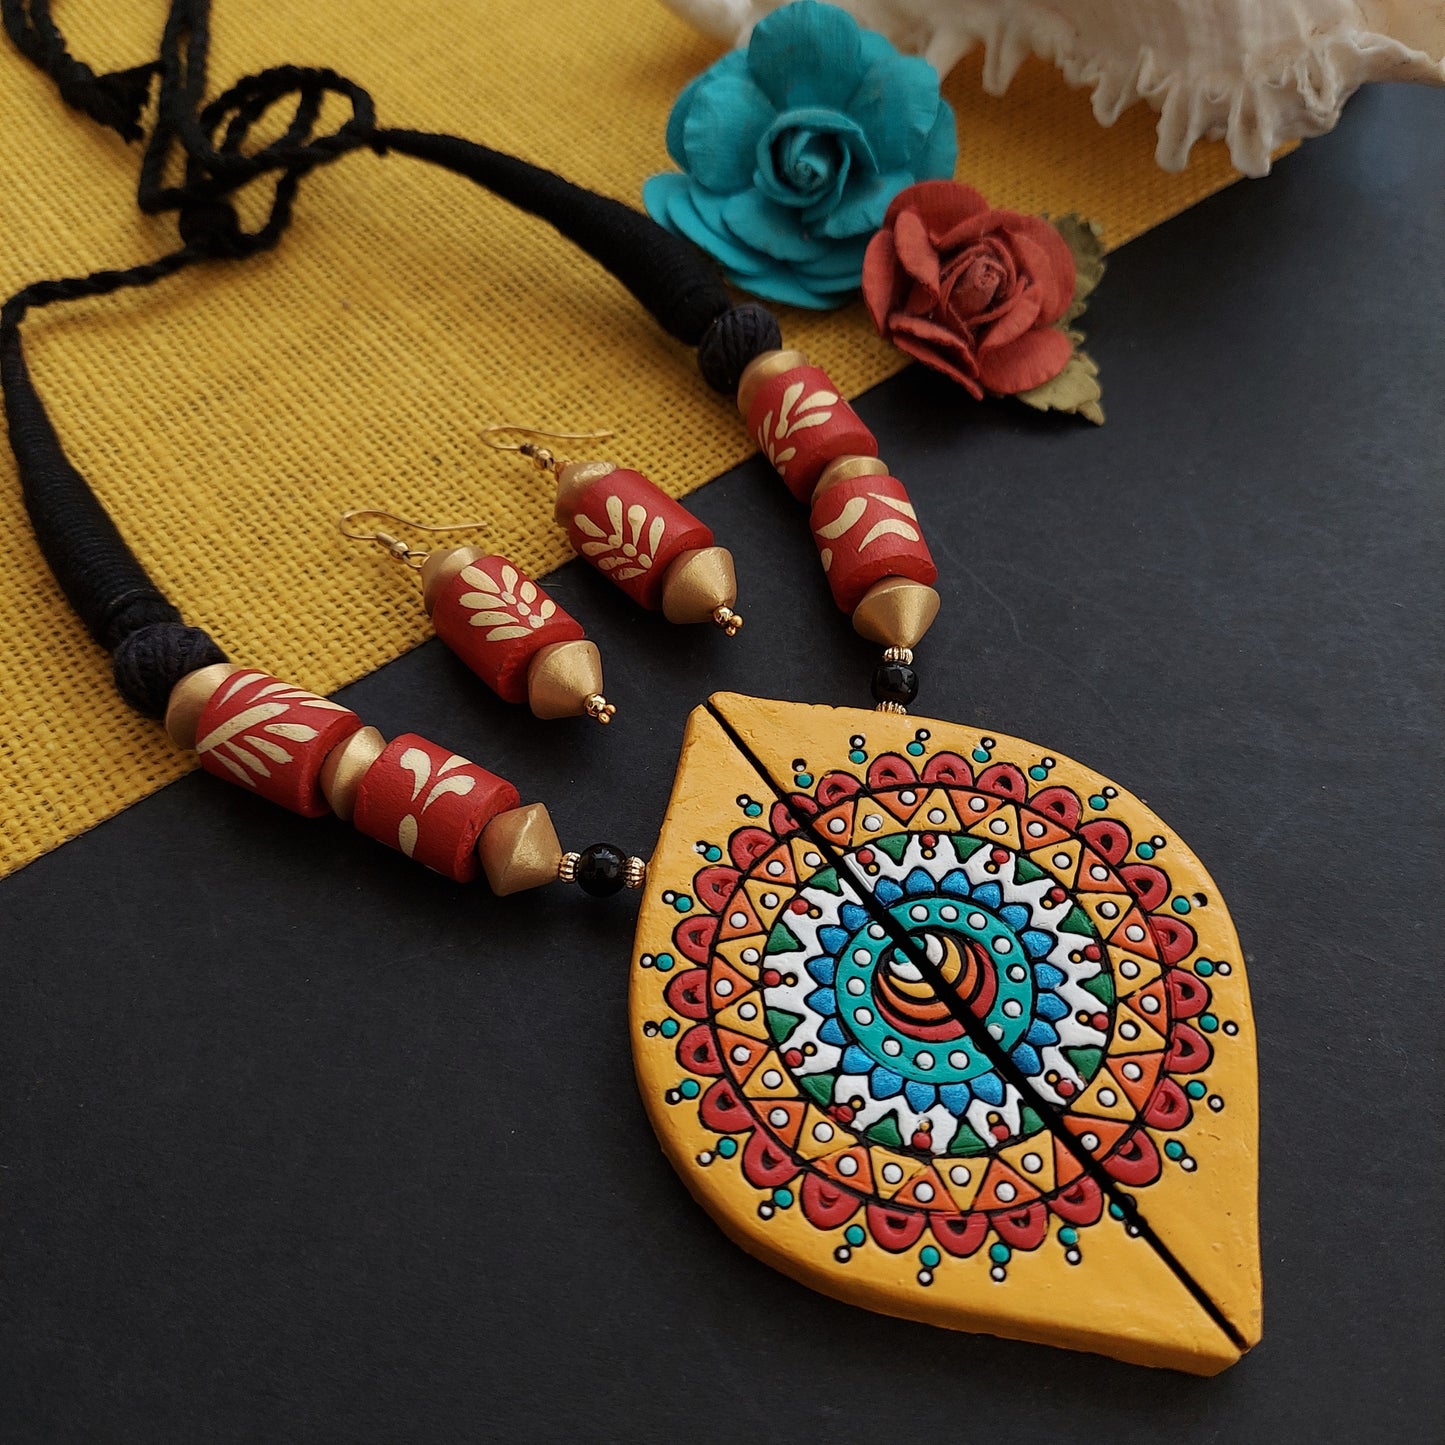 Multicolored Mandala Design 